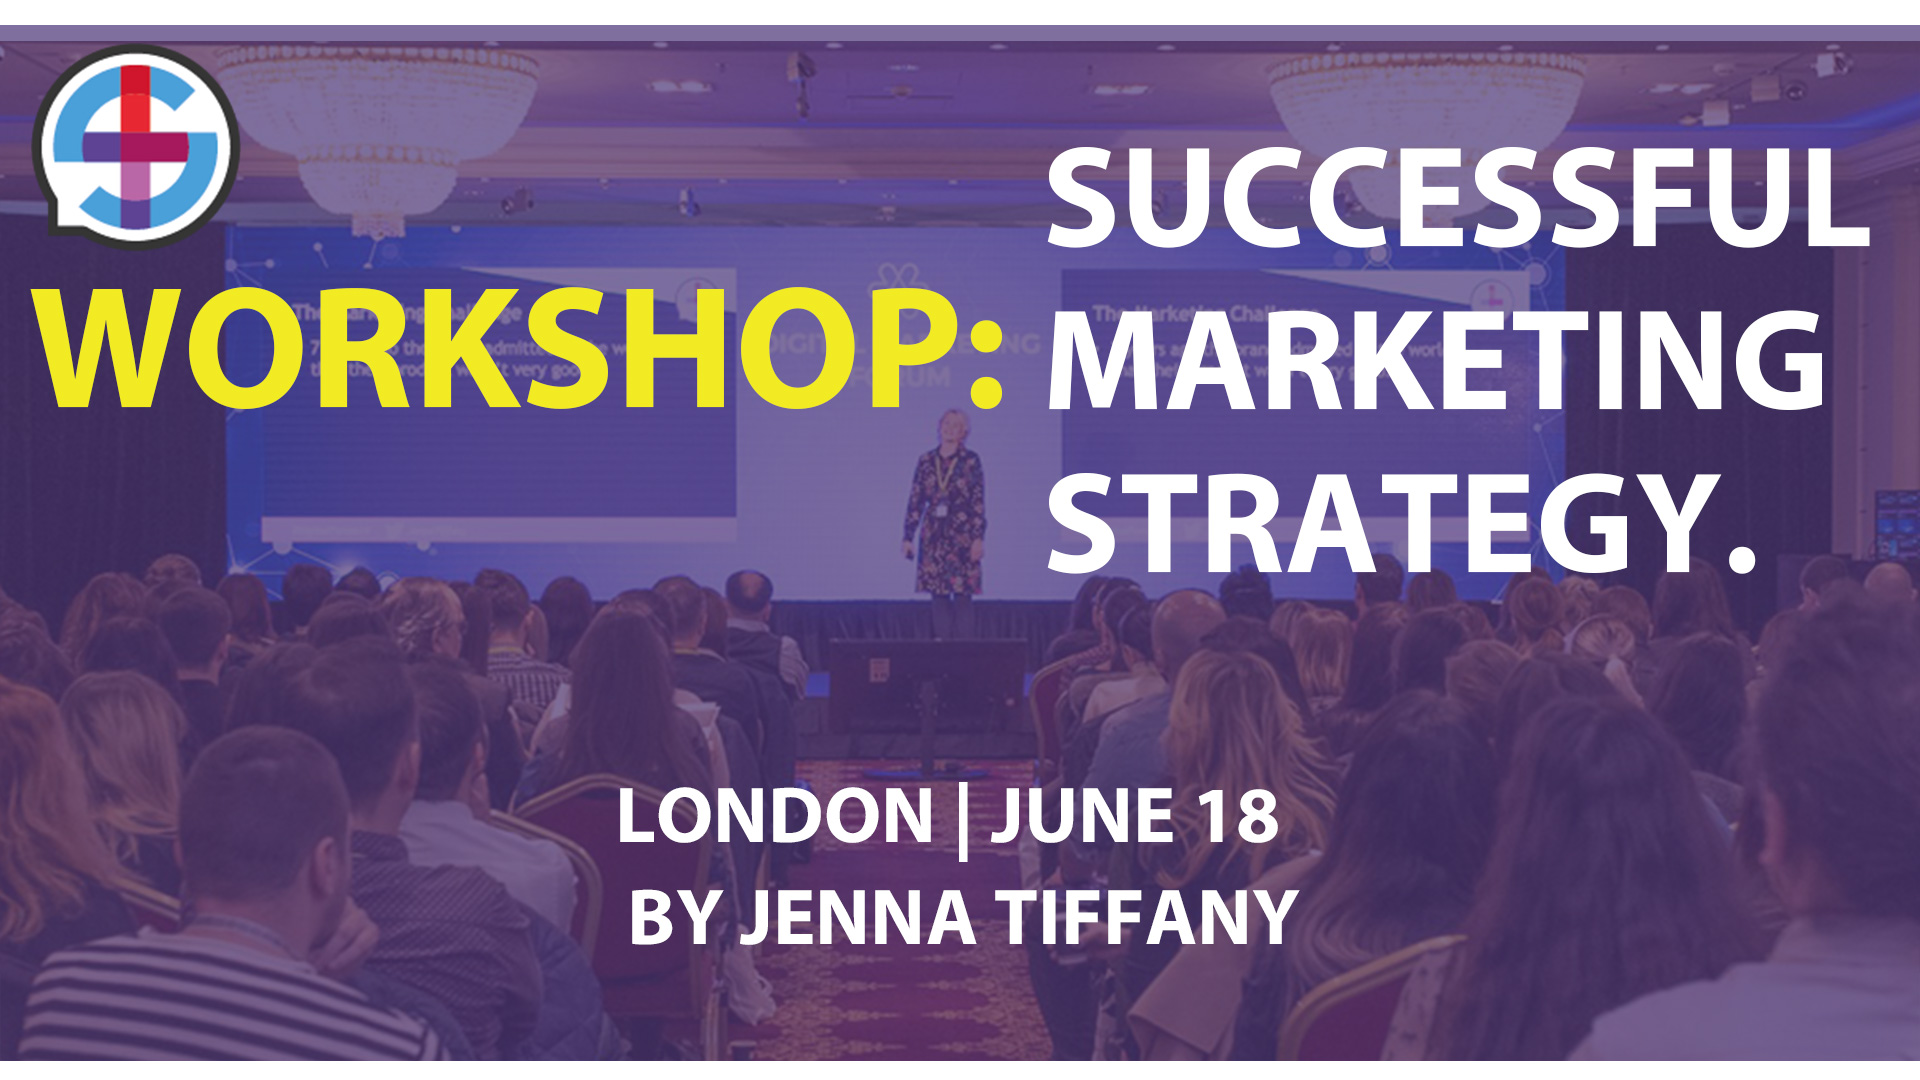 Marketing Strategy Workshop in London by Jenna Tiffany